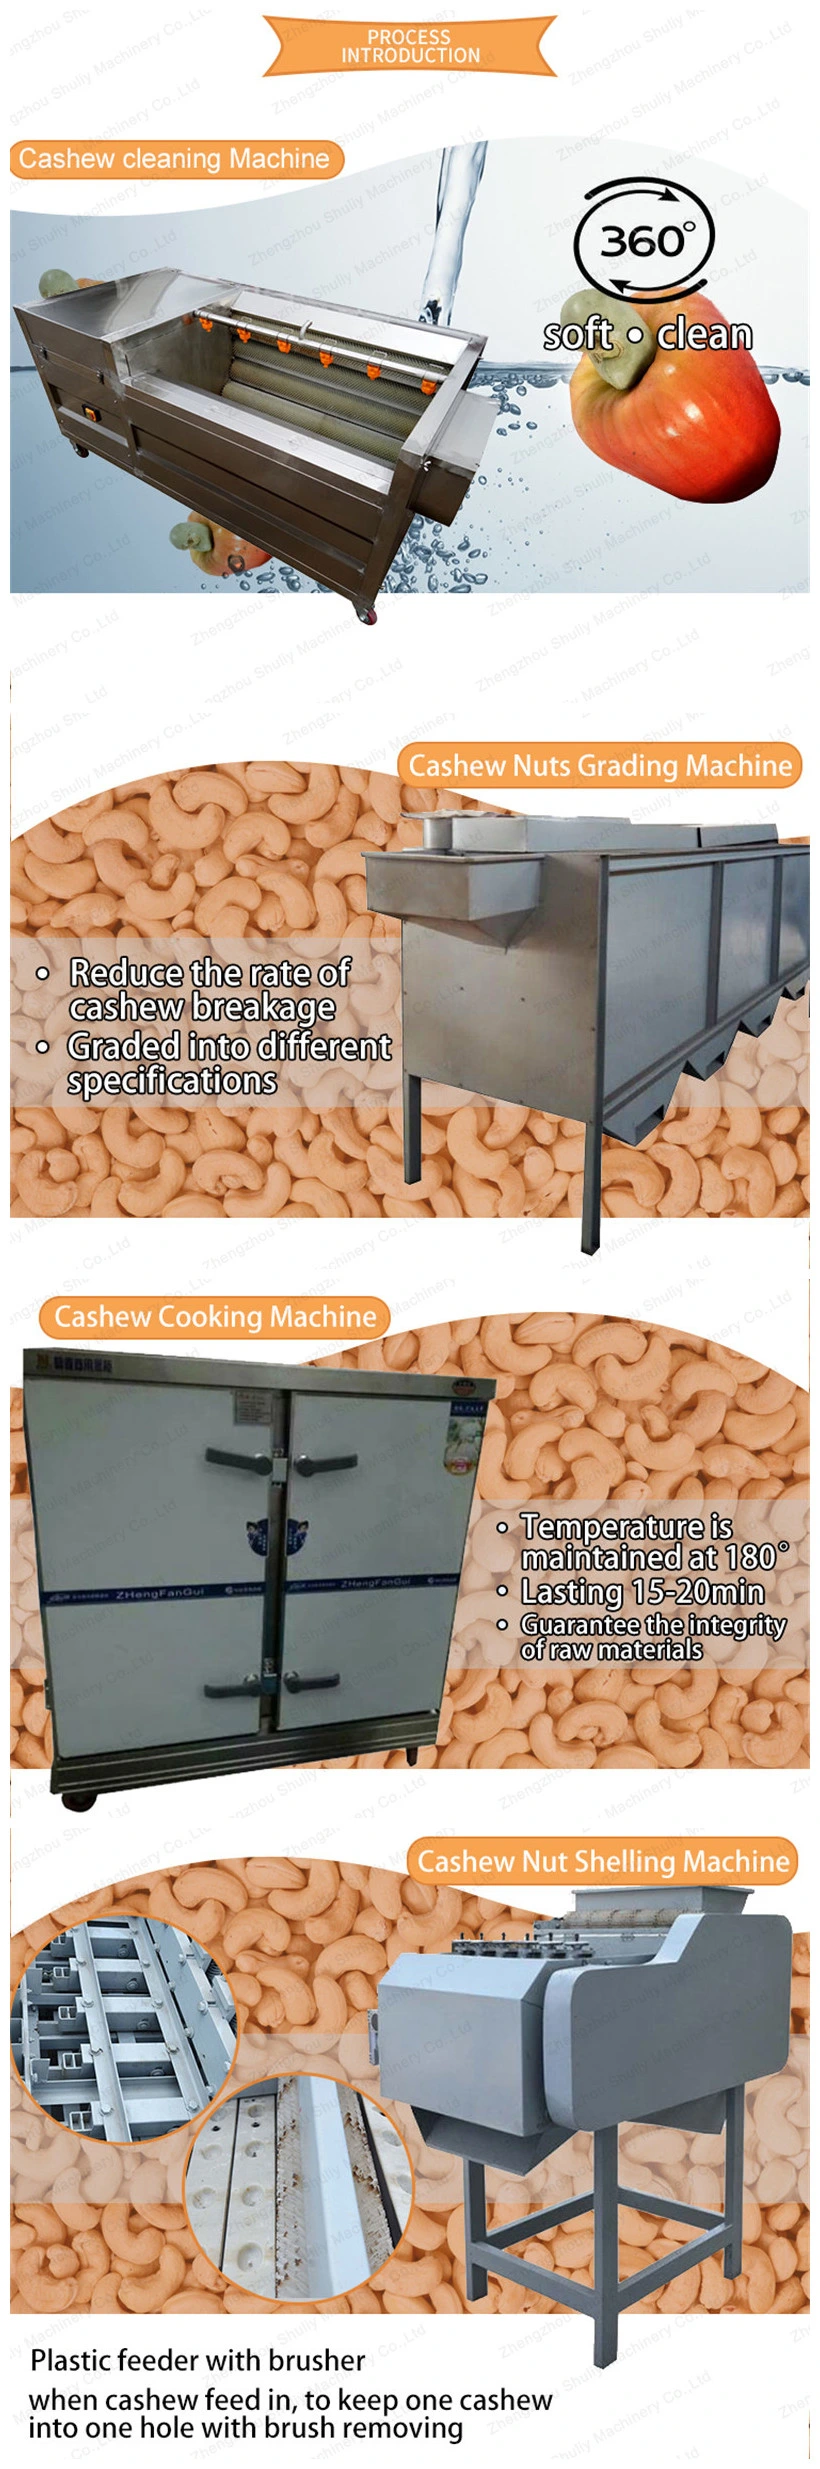 200kg Per Hour Cashew Nut Shelling Peeling Grading Machine for Hot Sale